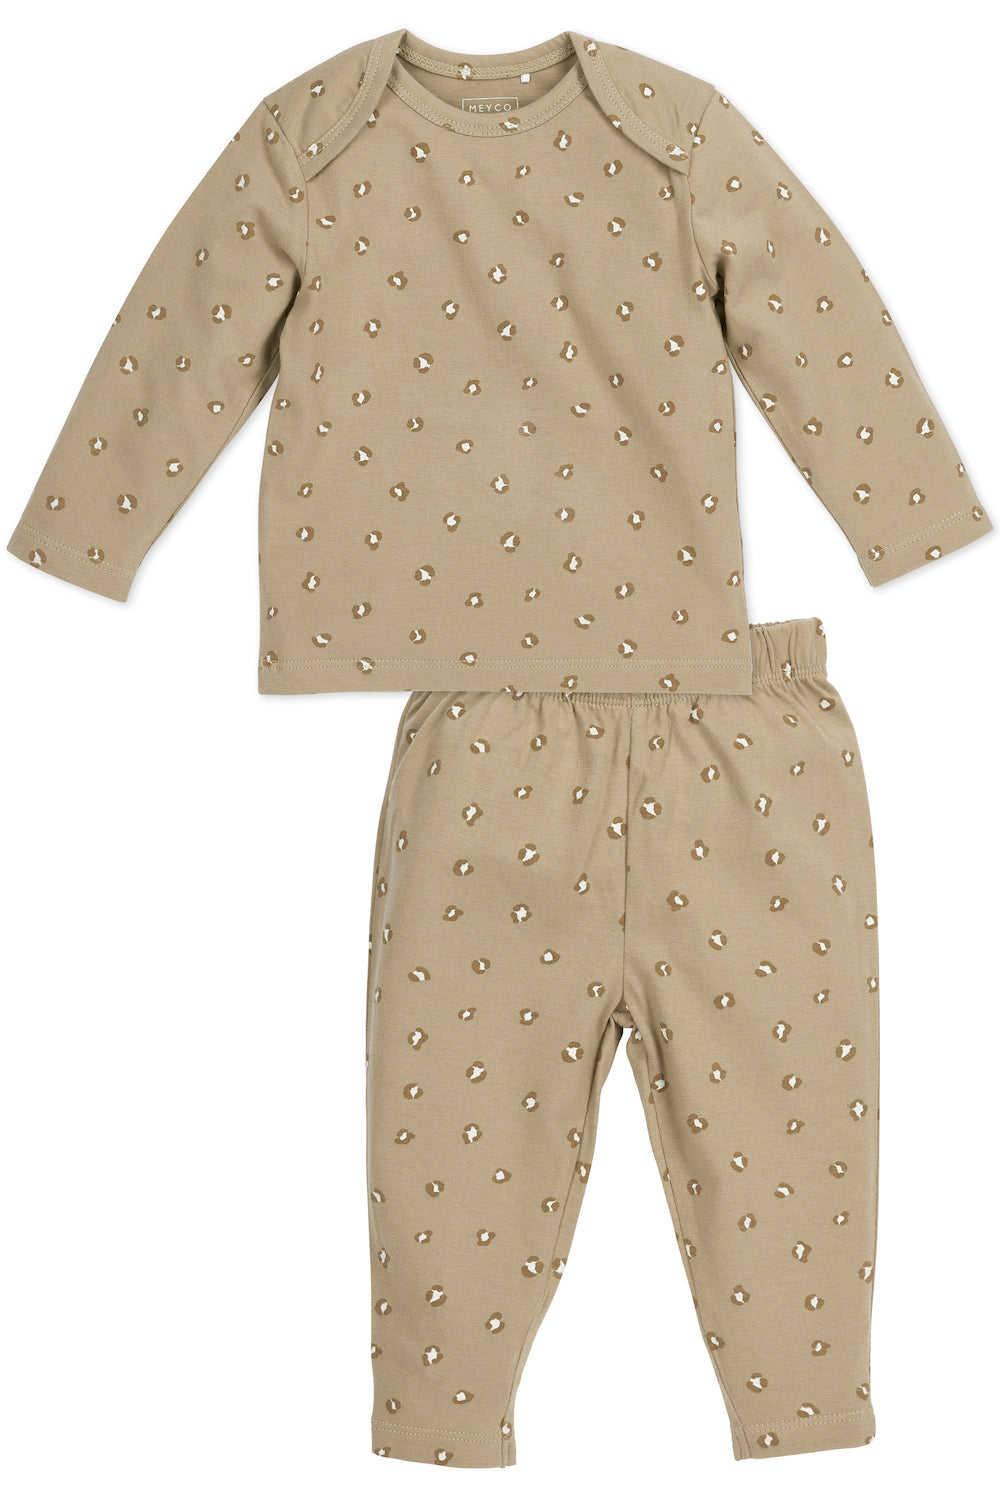 Pyjama Mini Panther Sand size 74/80